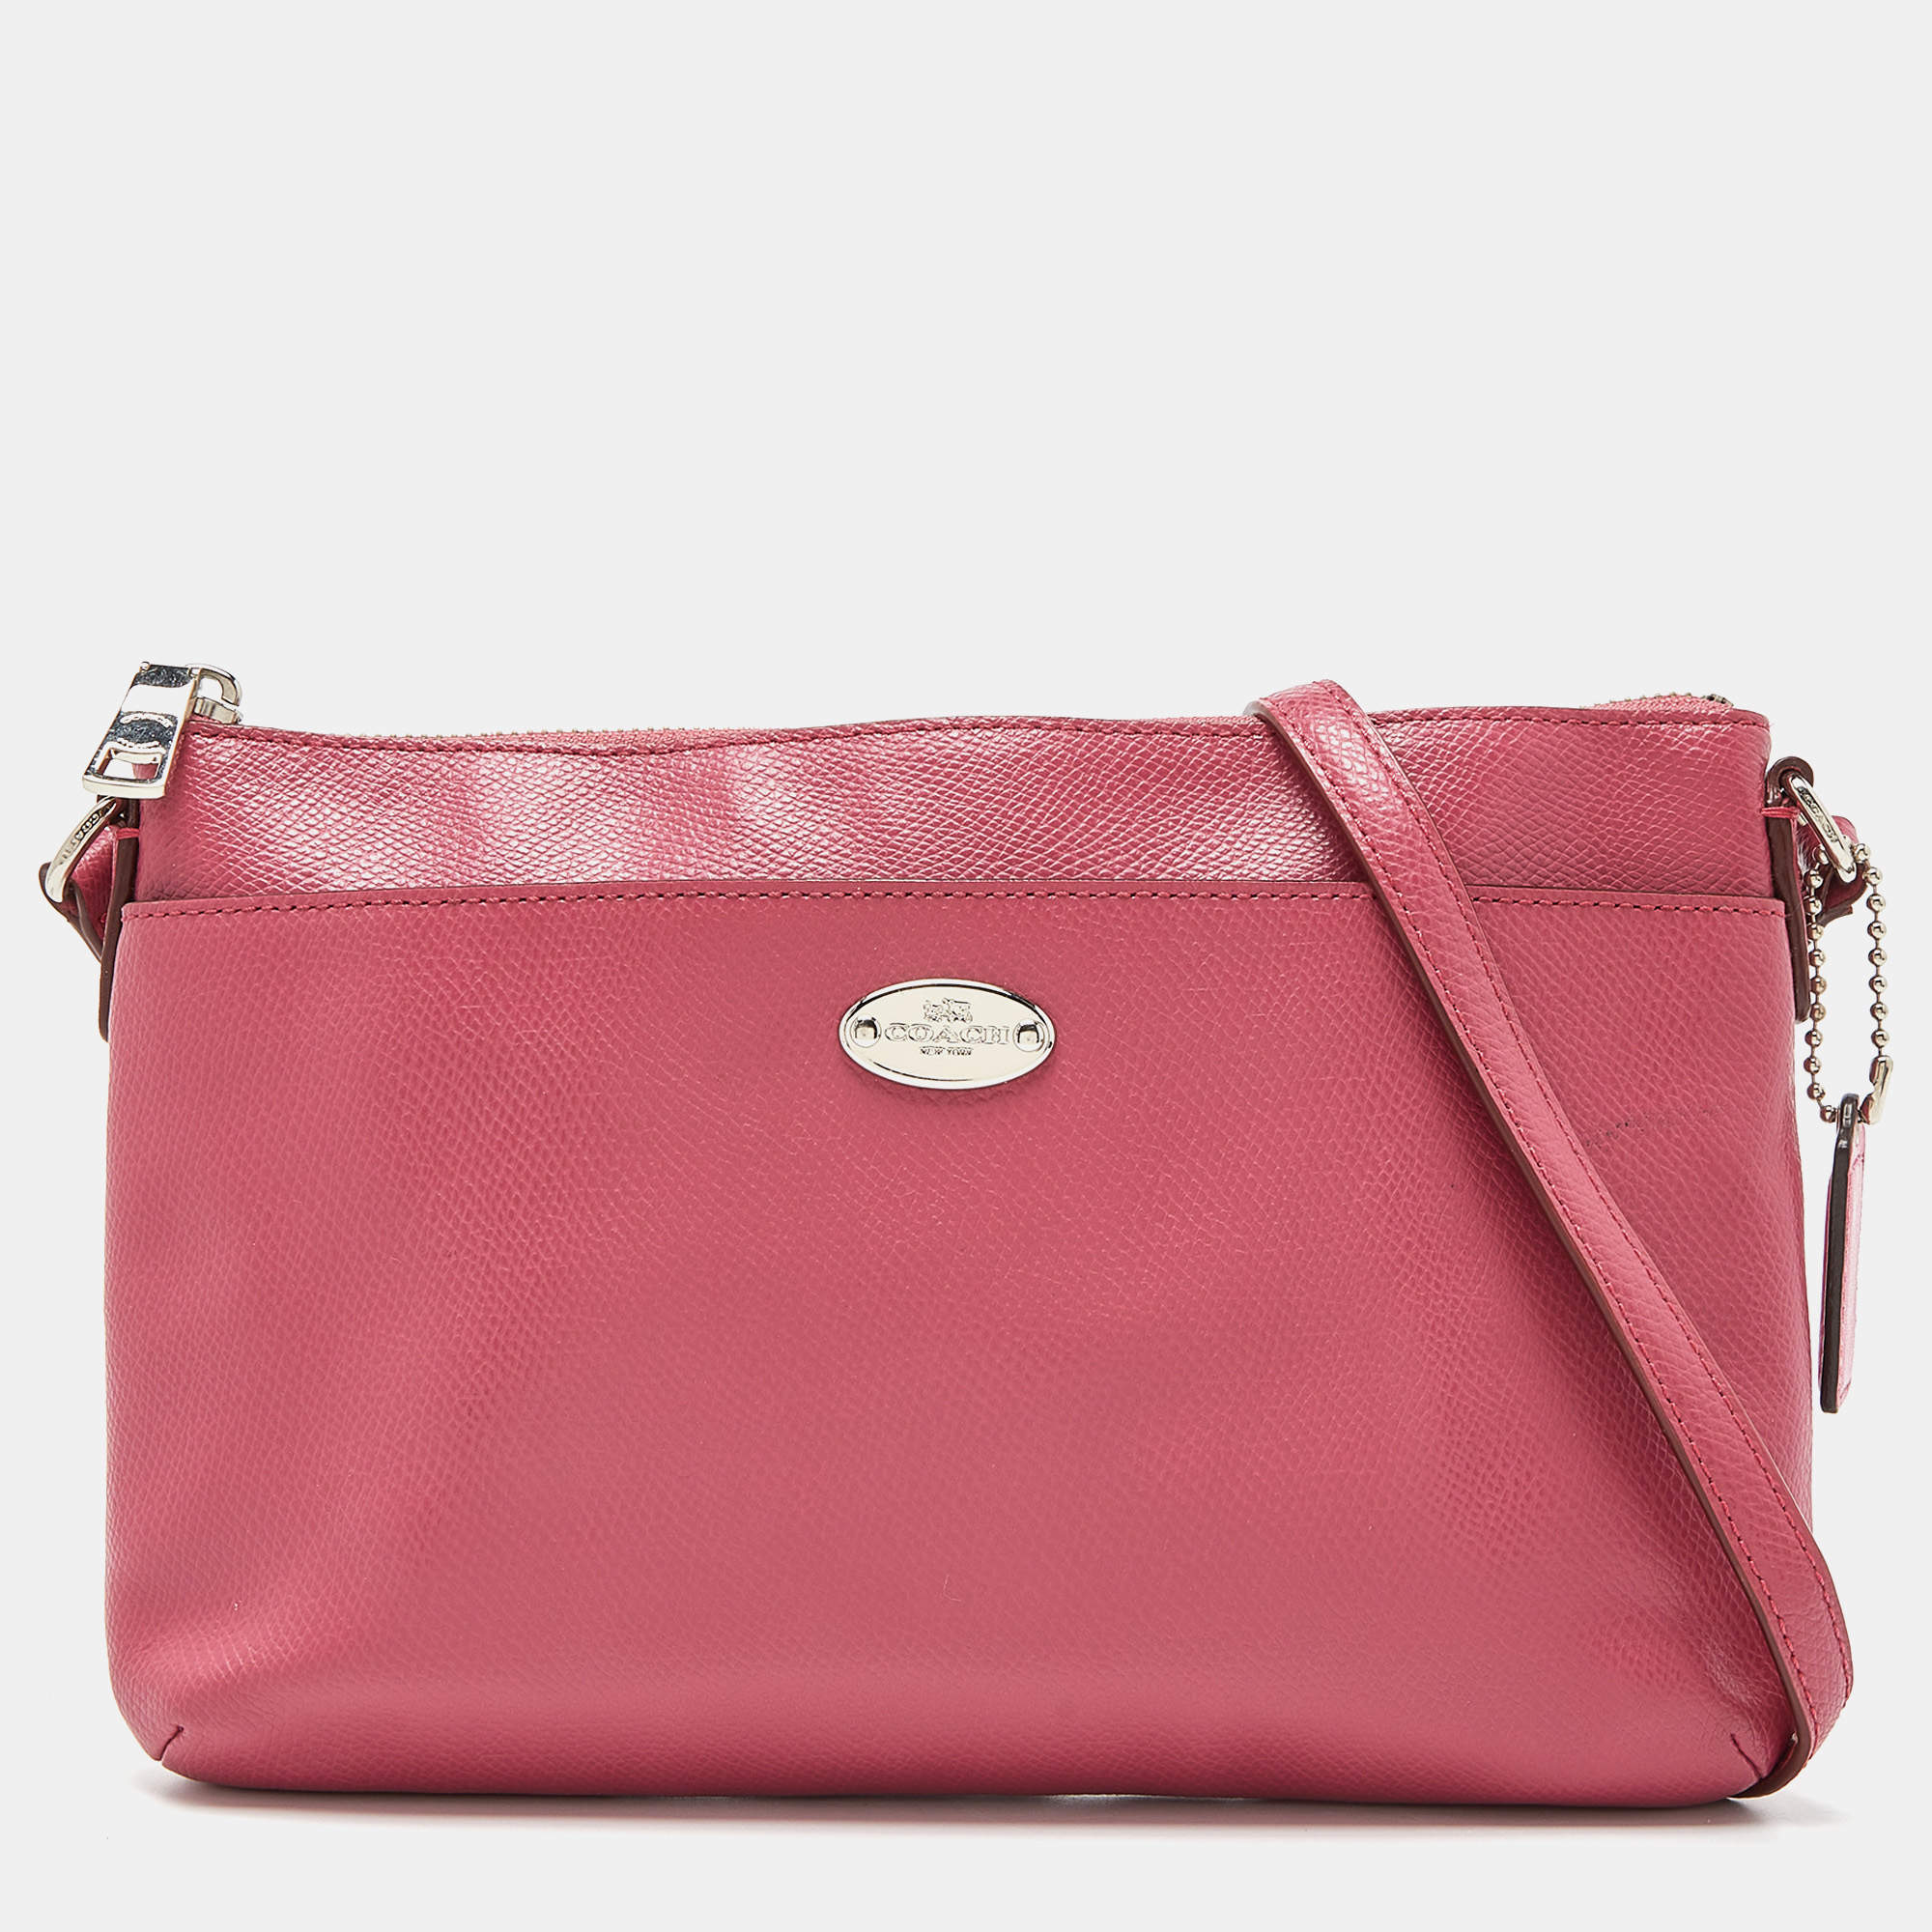 coach handbags Brown And Hot Pink M1282-F23392 | eBay